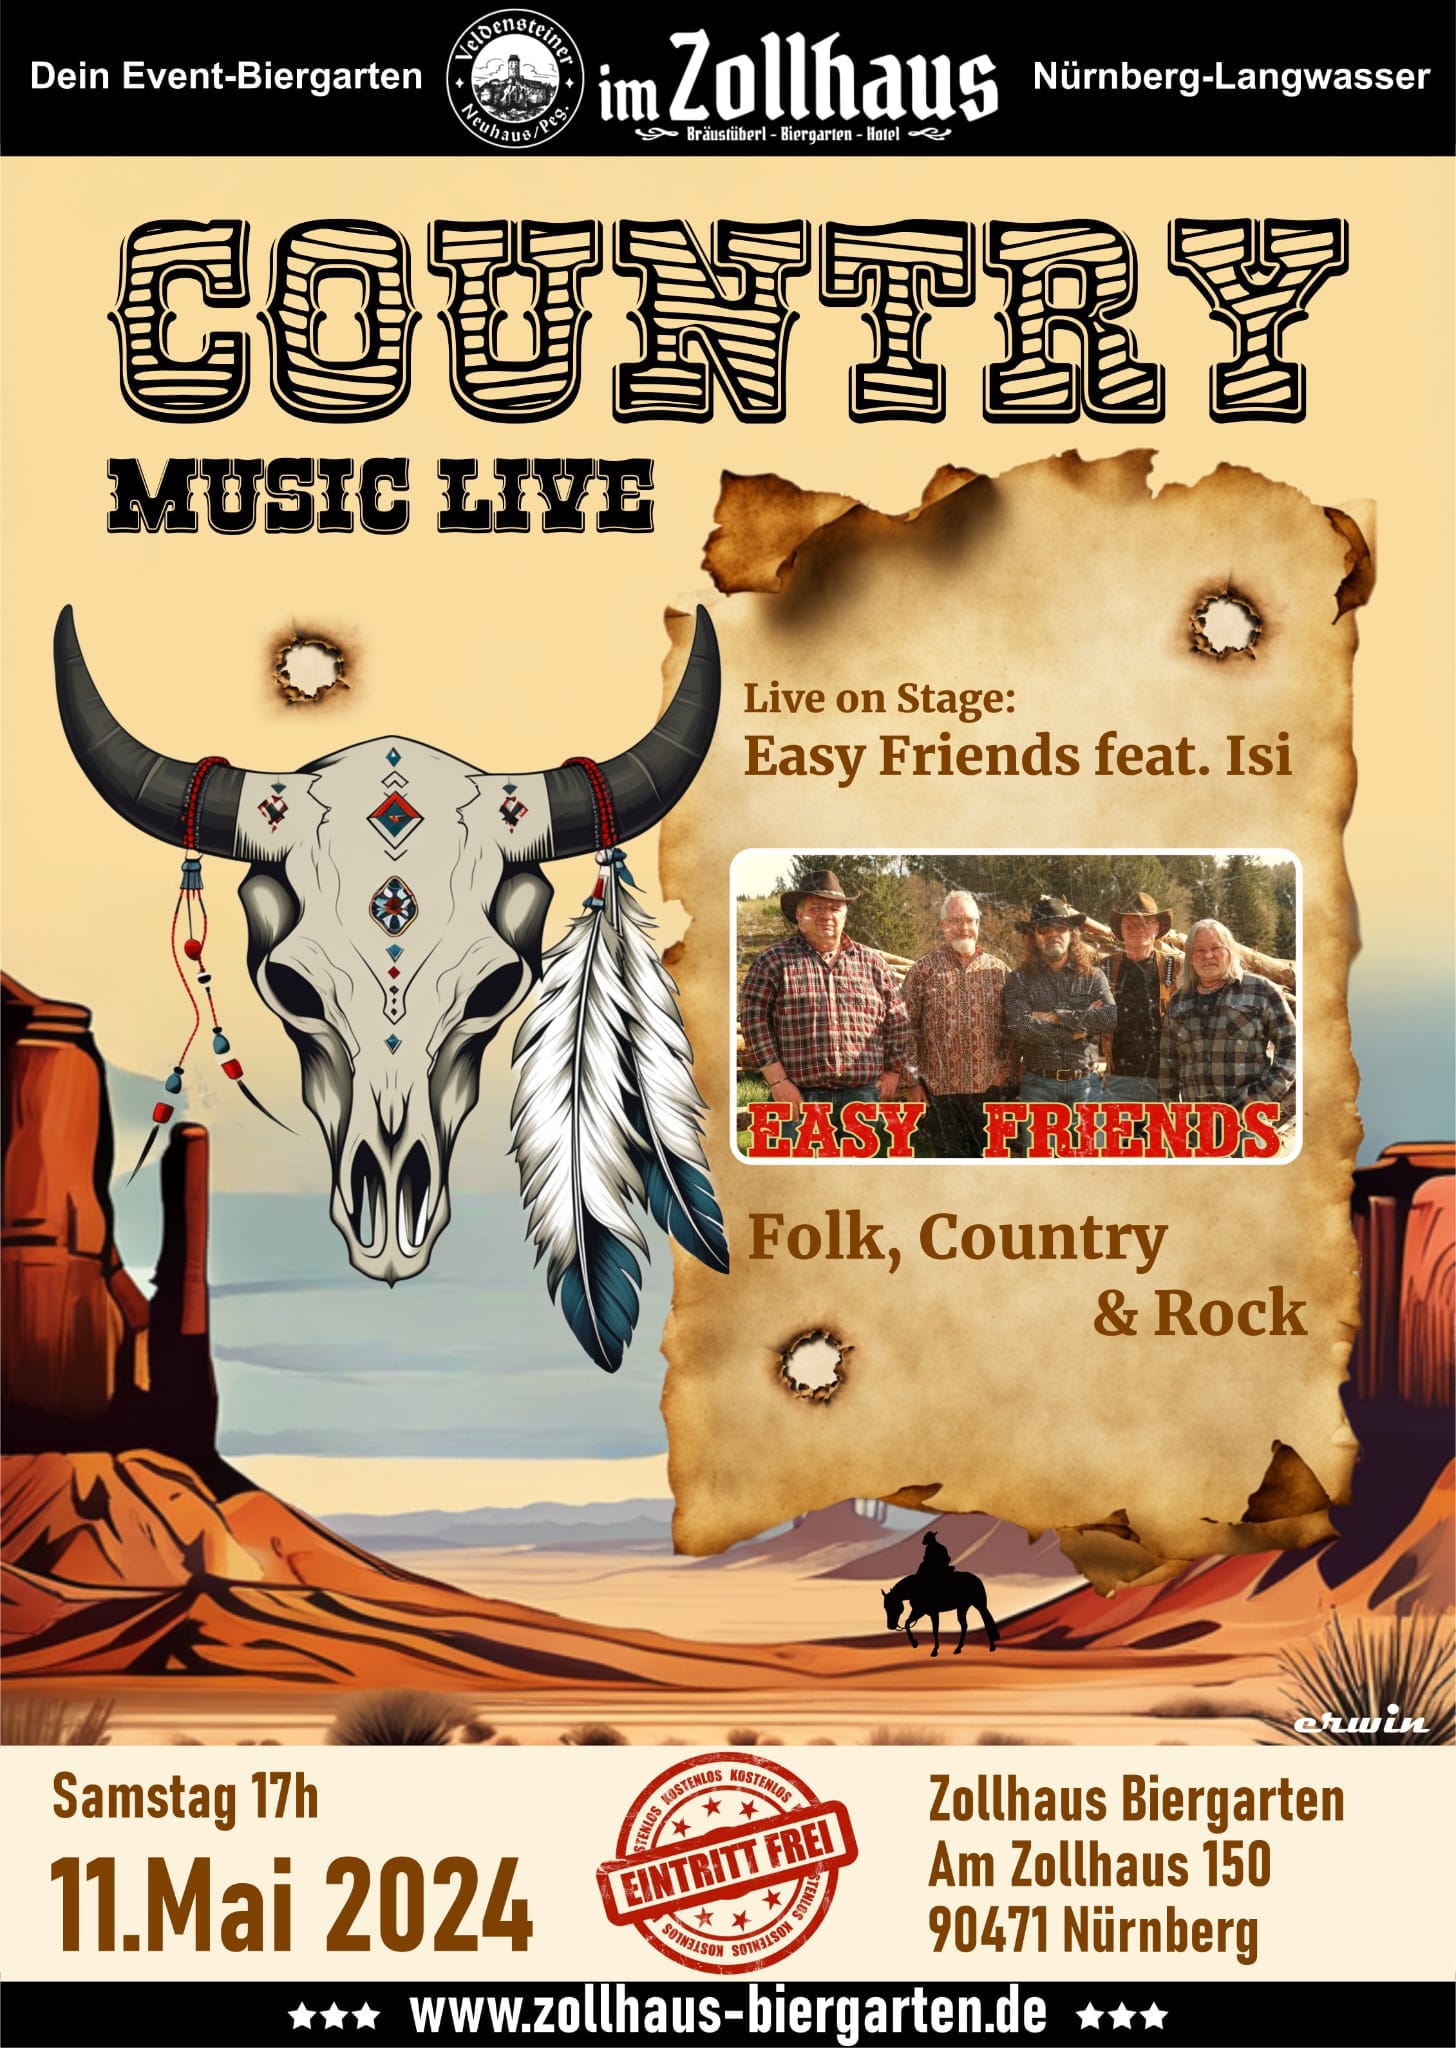 Easy Friends feat. Isi (Folk, Country & Rock) Eintritt frei